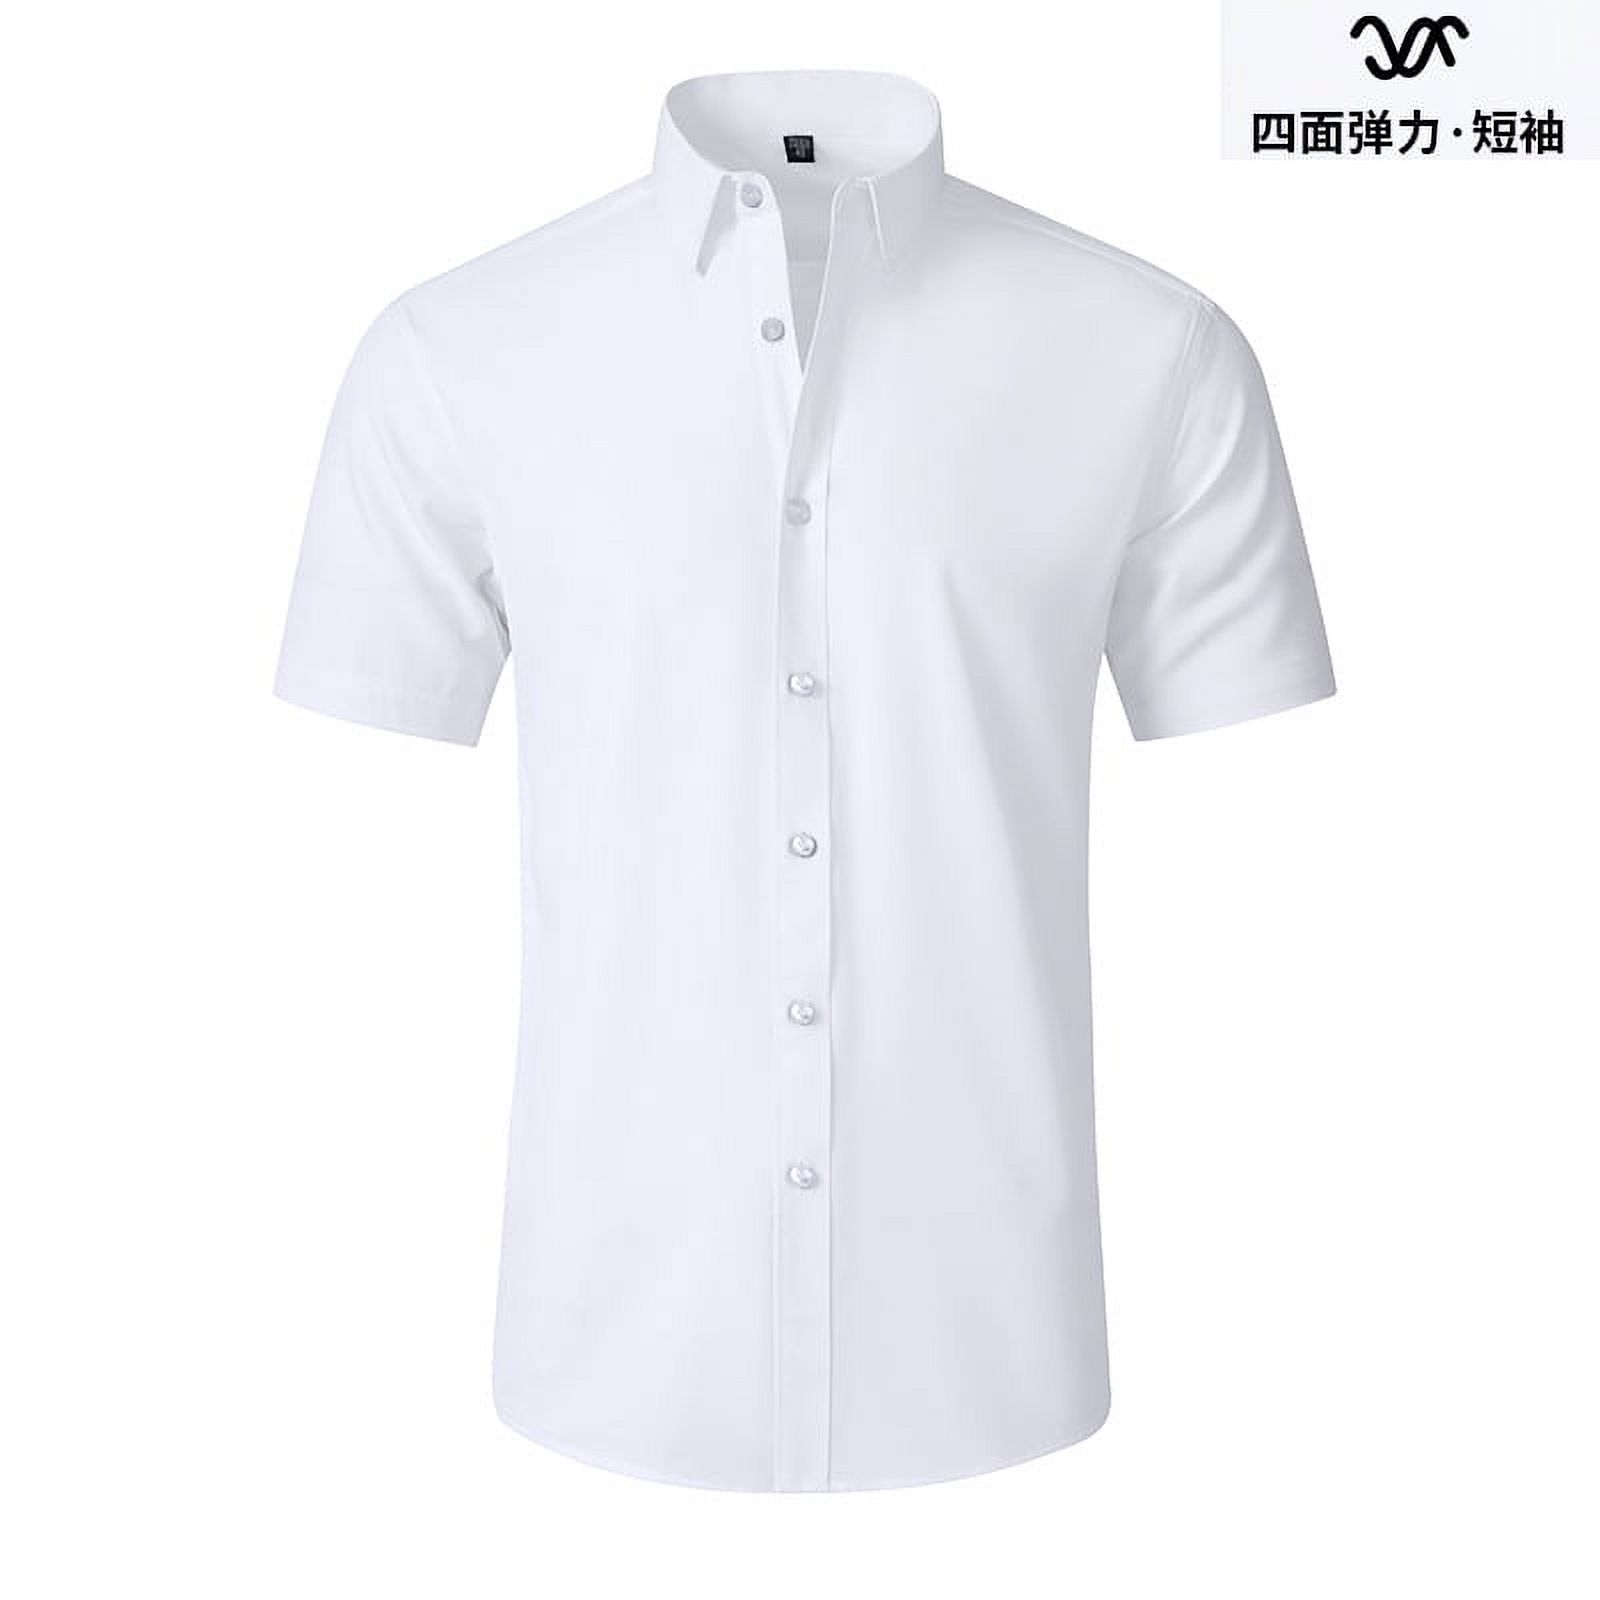 No-iron shirt men's short-sleeved plain elastic business casual men's ...